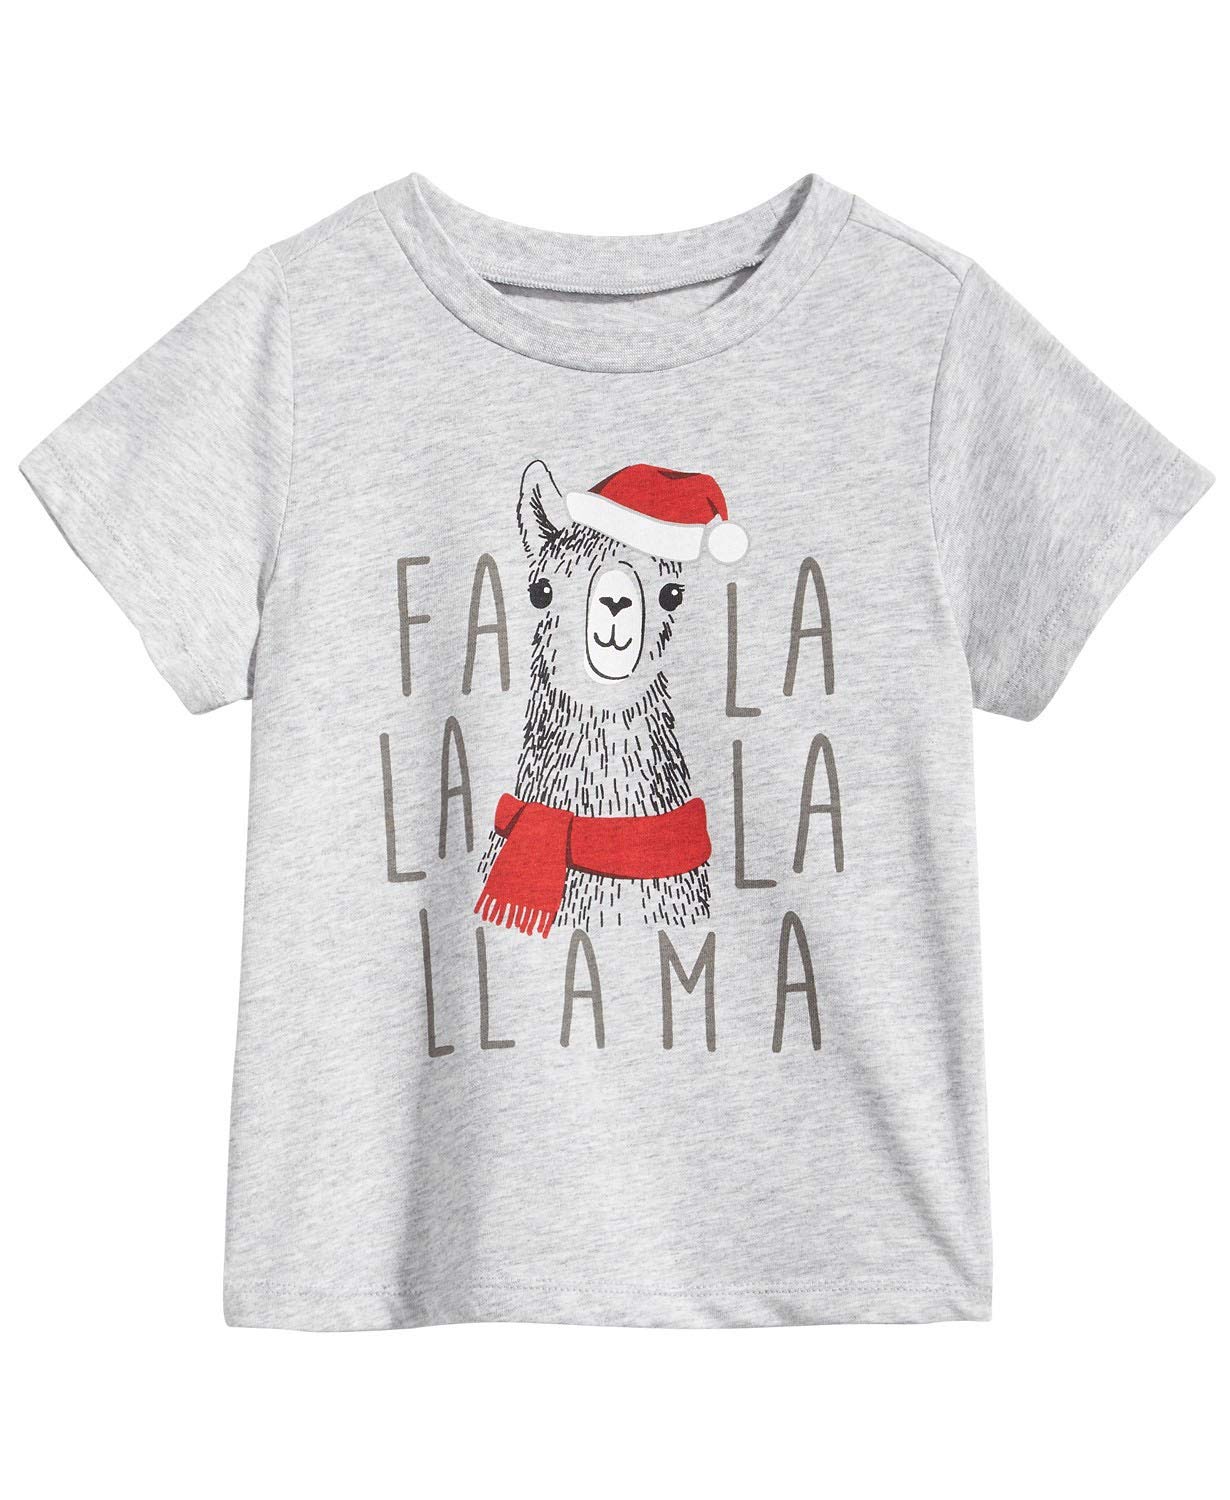 First Impressions Toddler Boys Llama-Print T-Shirt, 12 Month - Grey